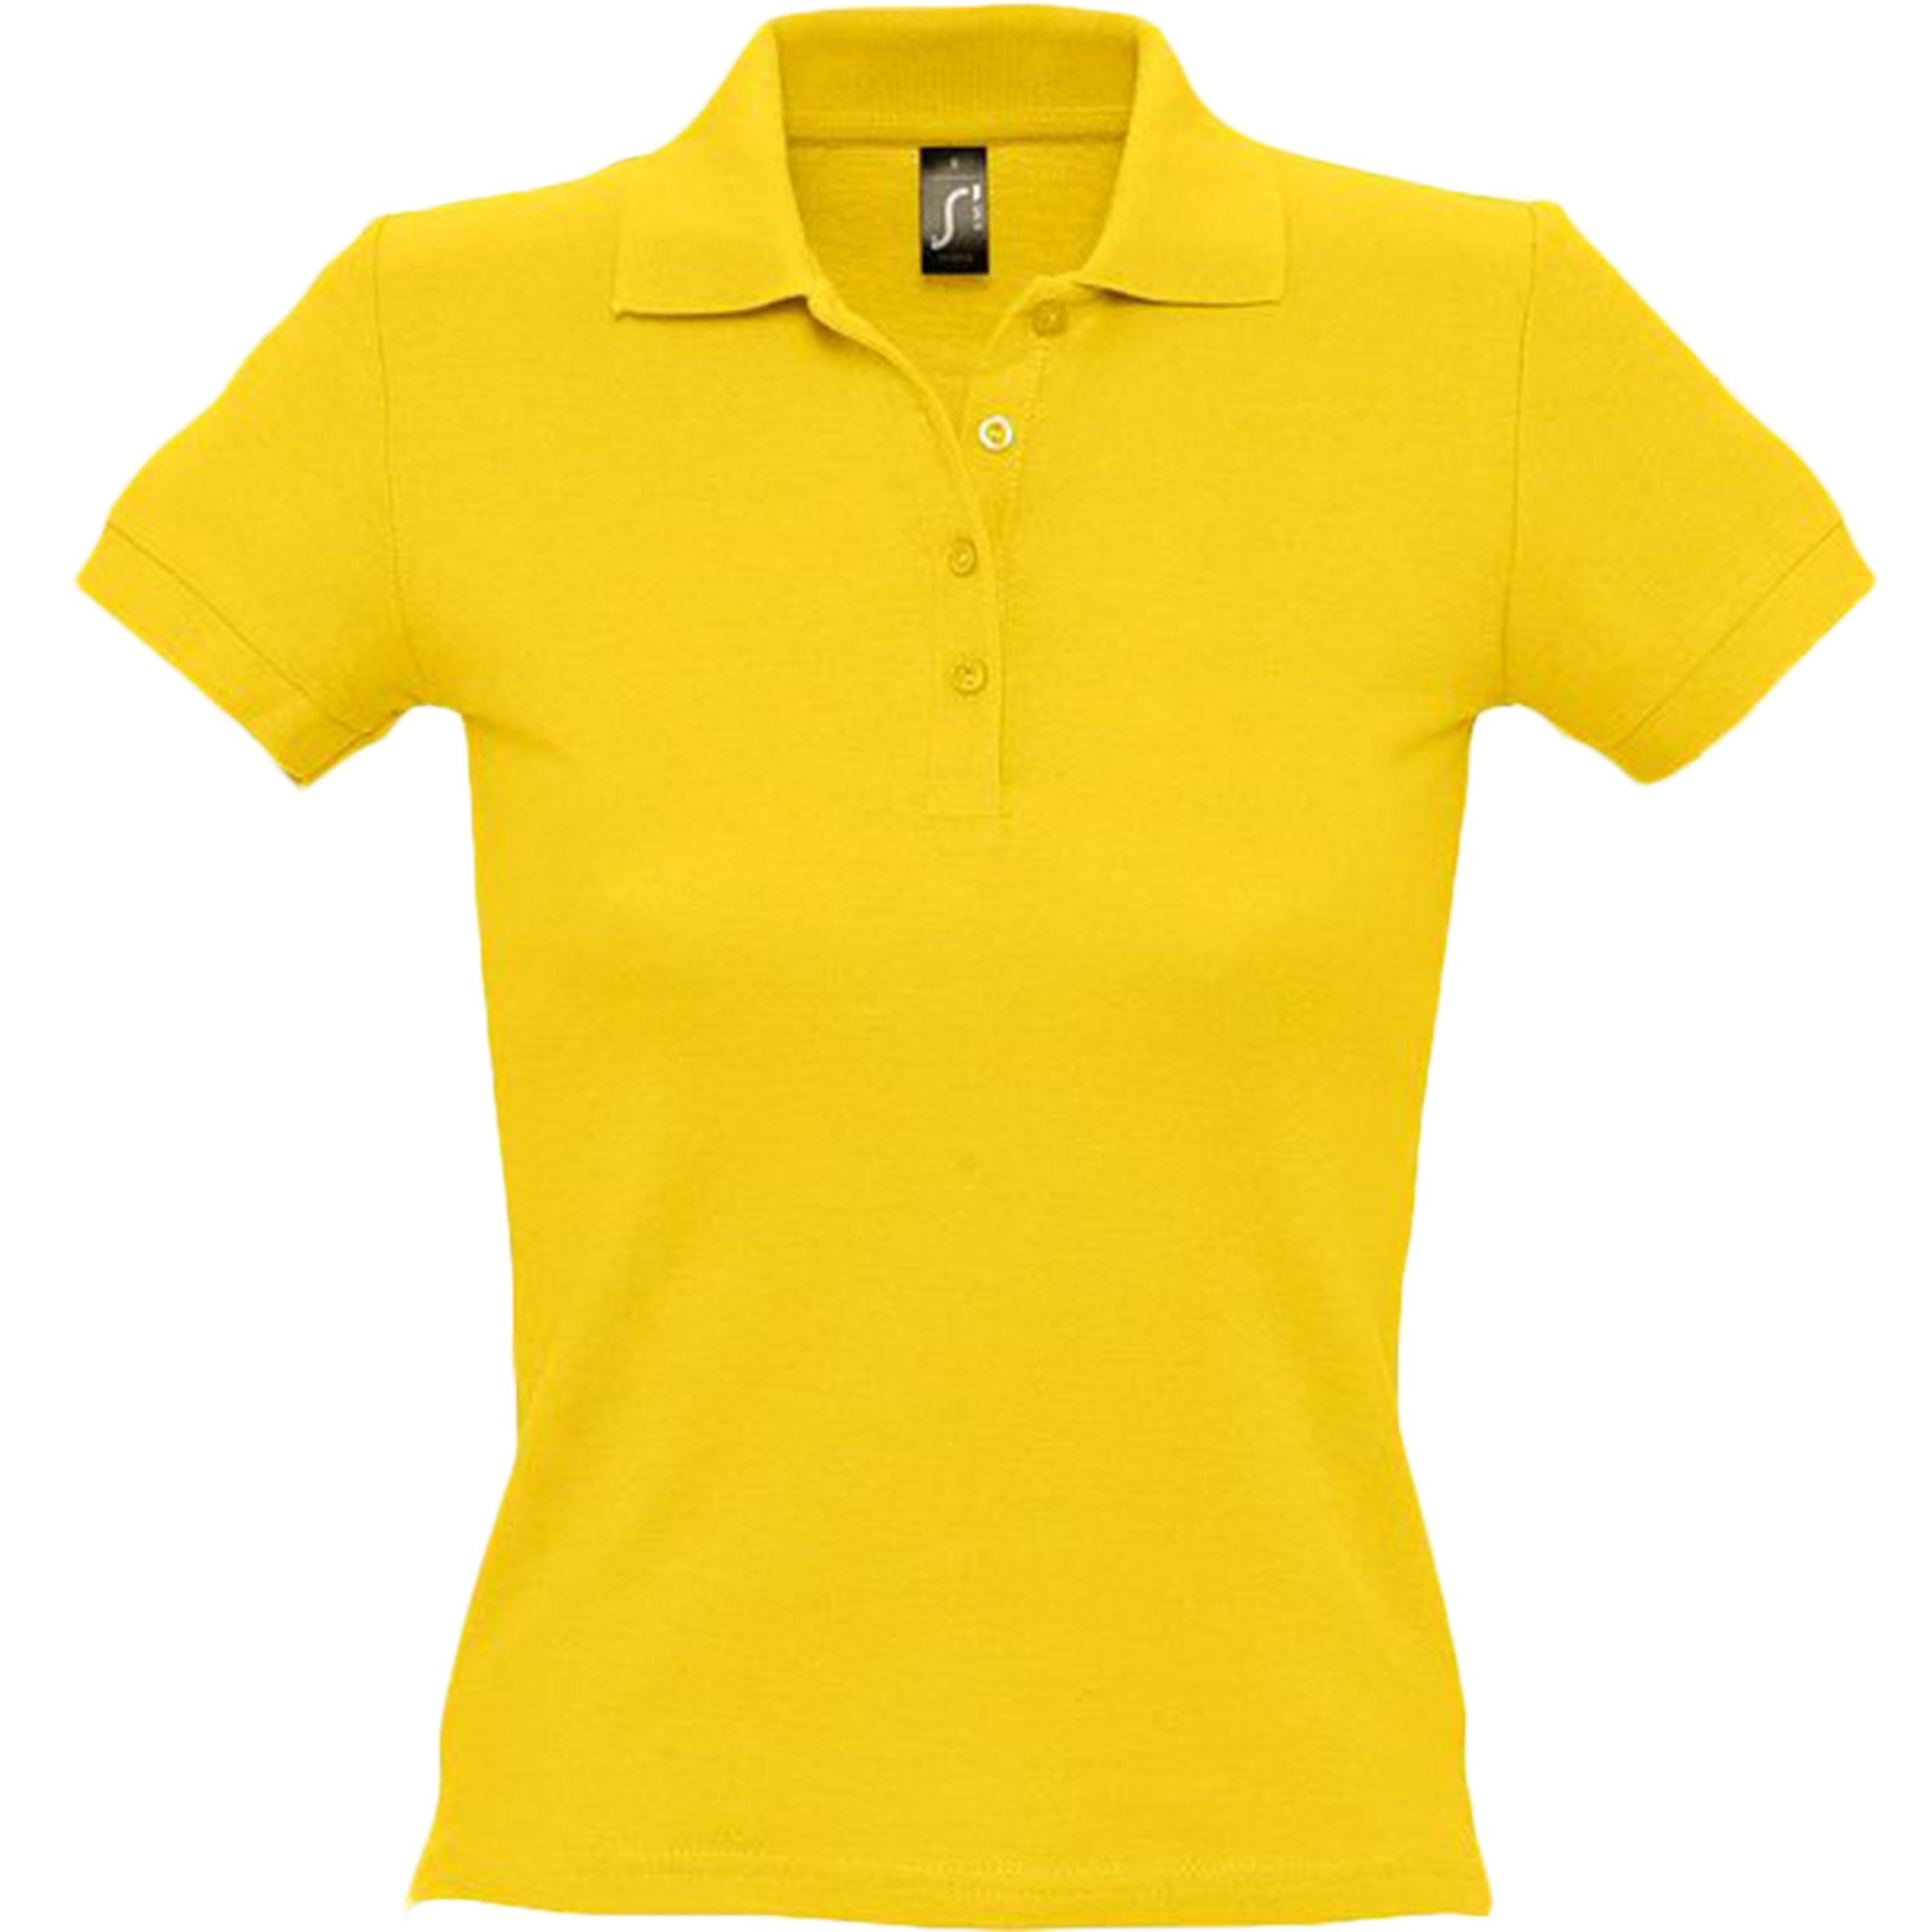 Рубашка поло женская желтая PEOPLE арт. 1895 SALE